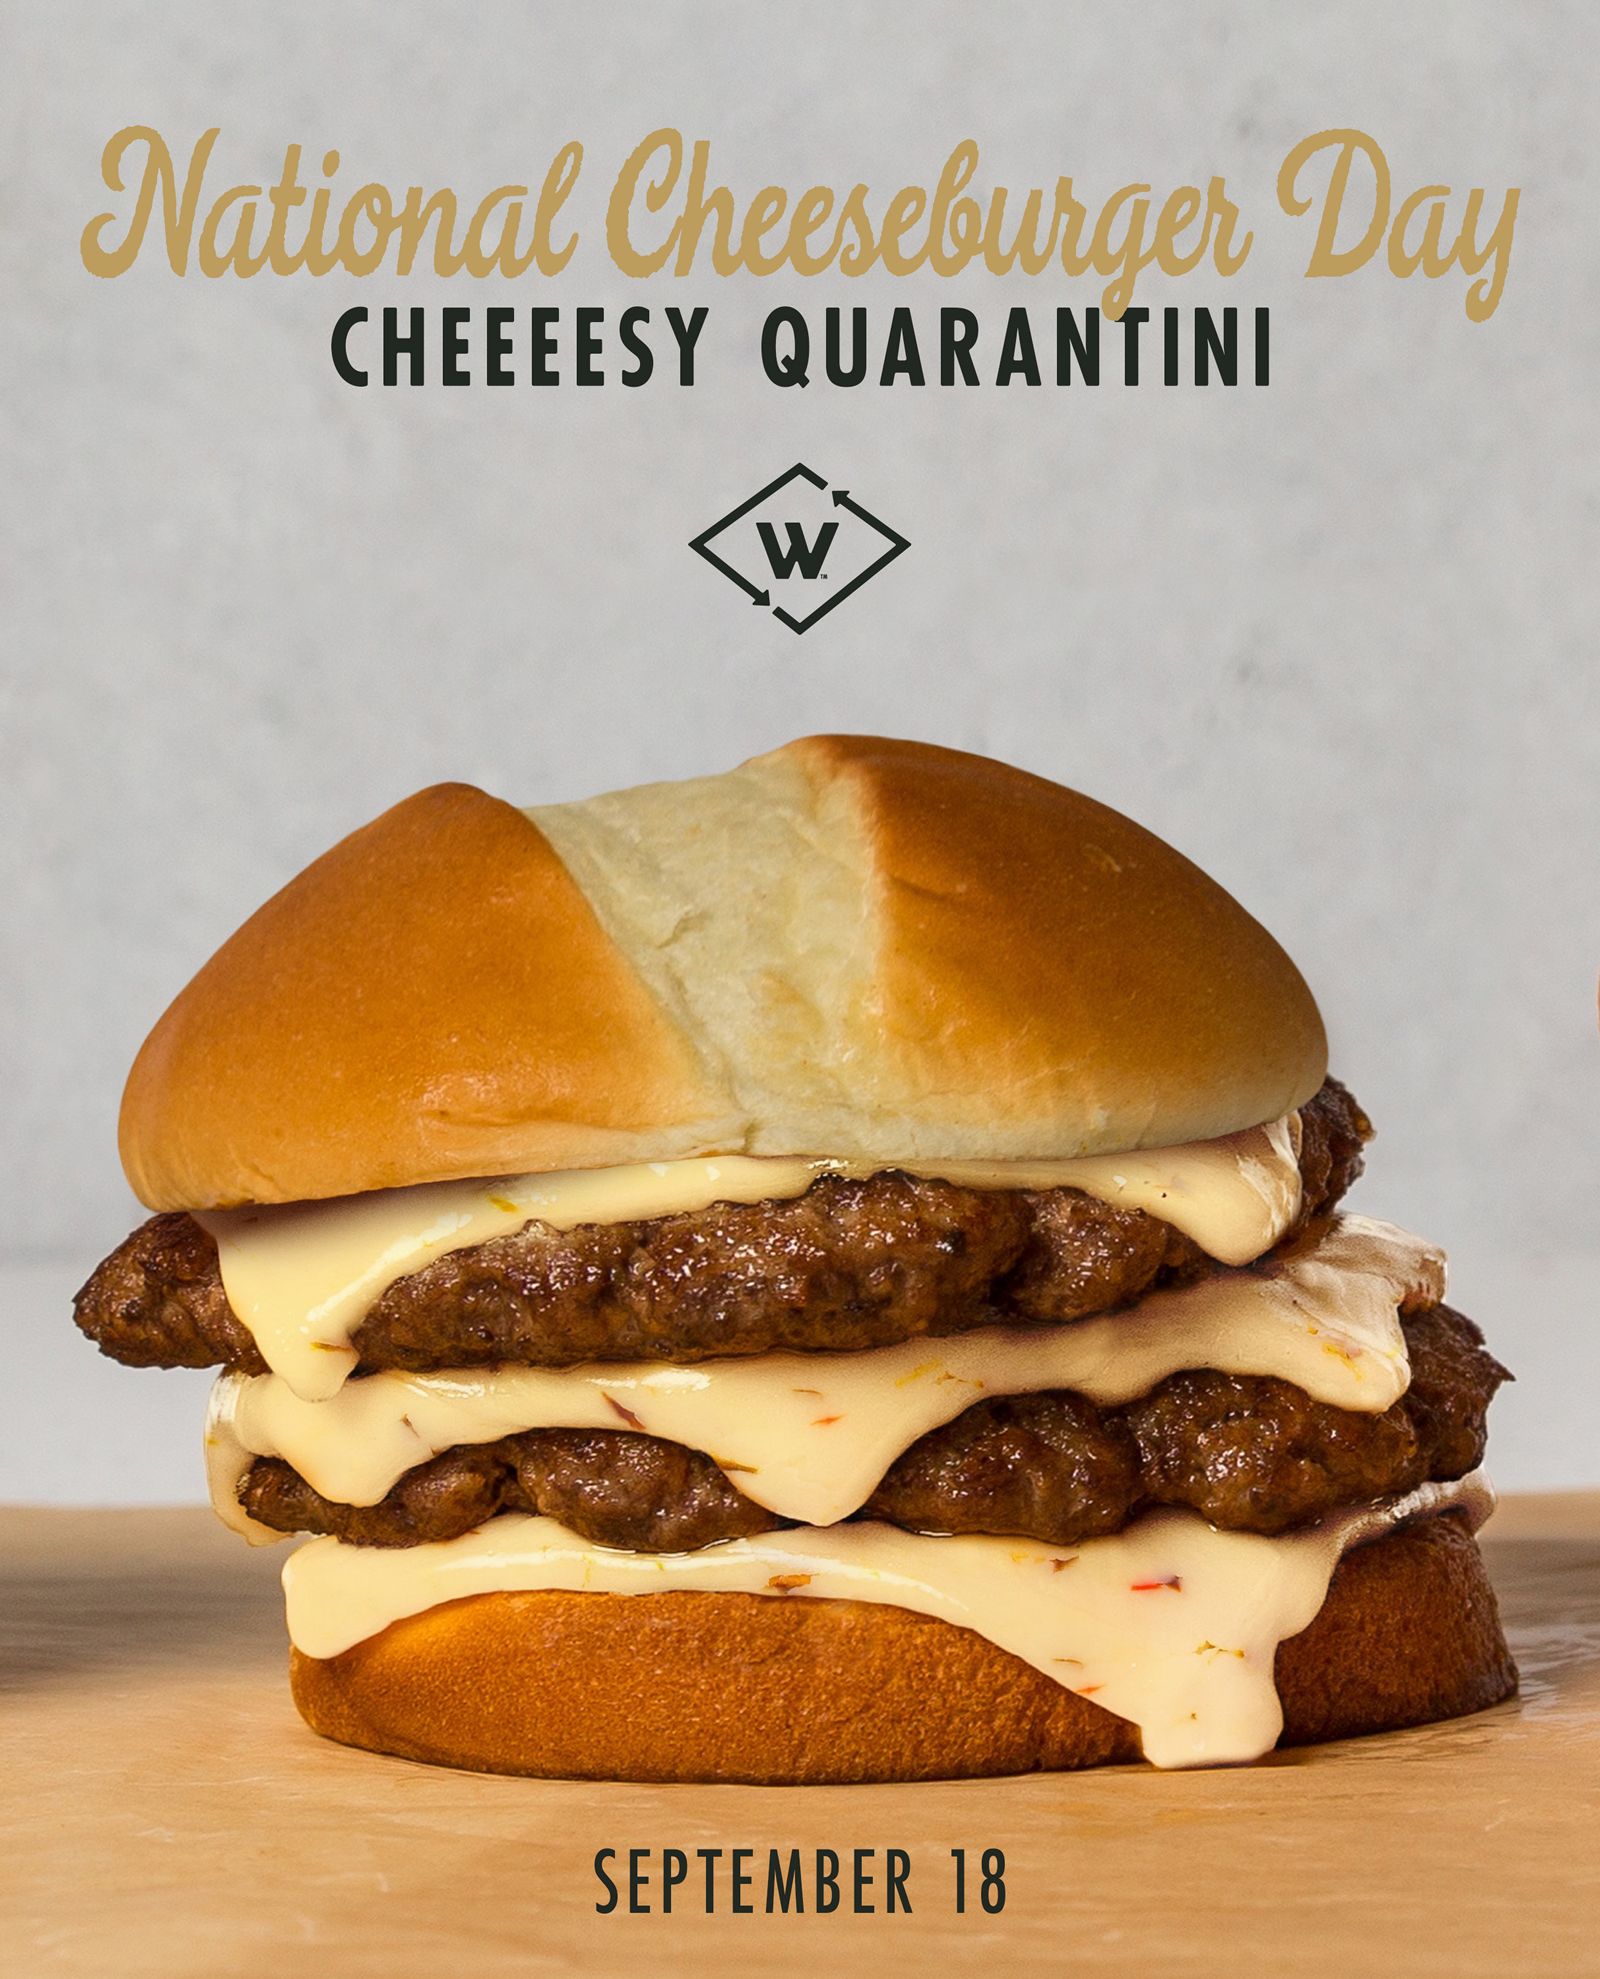 Wayback Burgers Celebrates National Cheeseburger Day with "Cheeeesy Quarantini" Burger